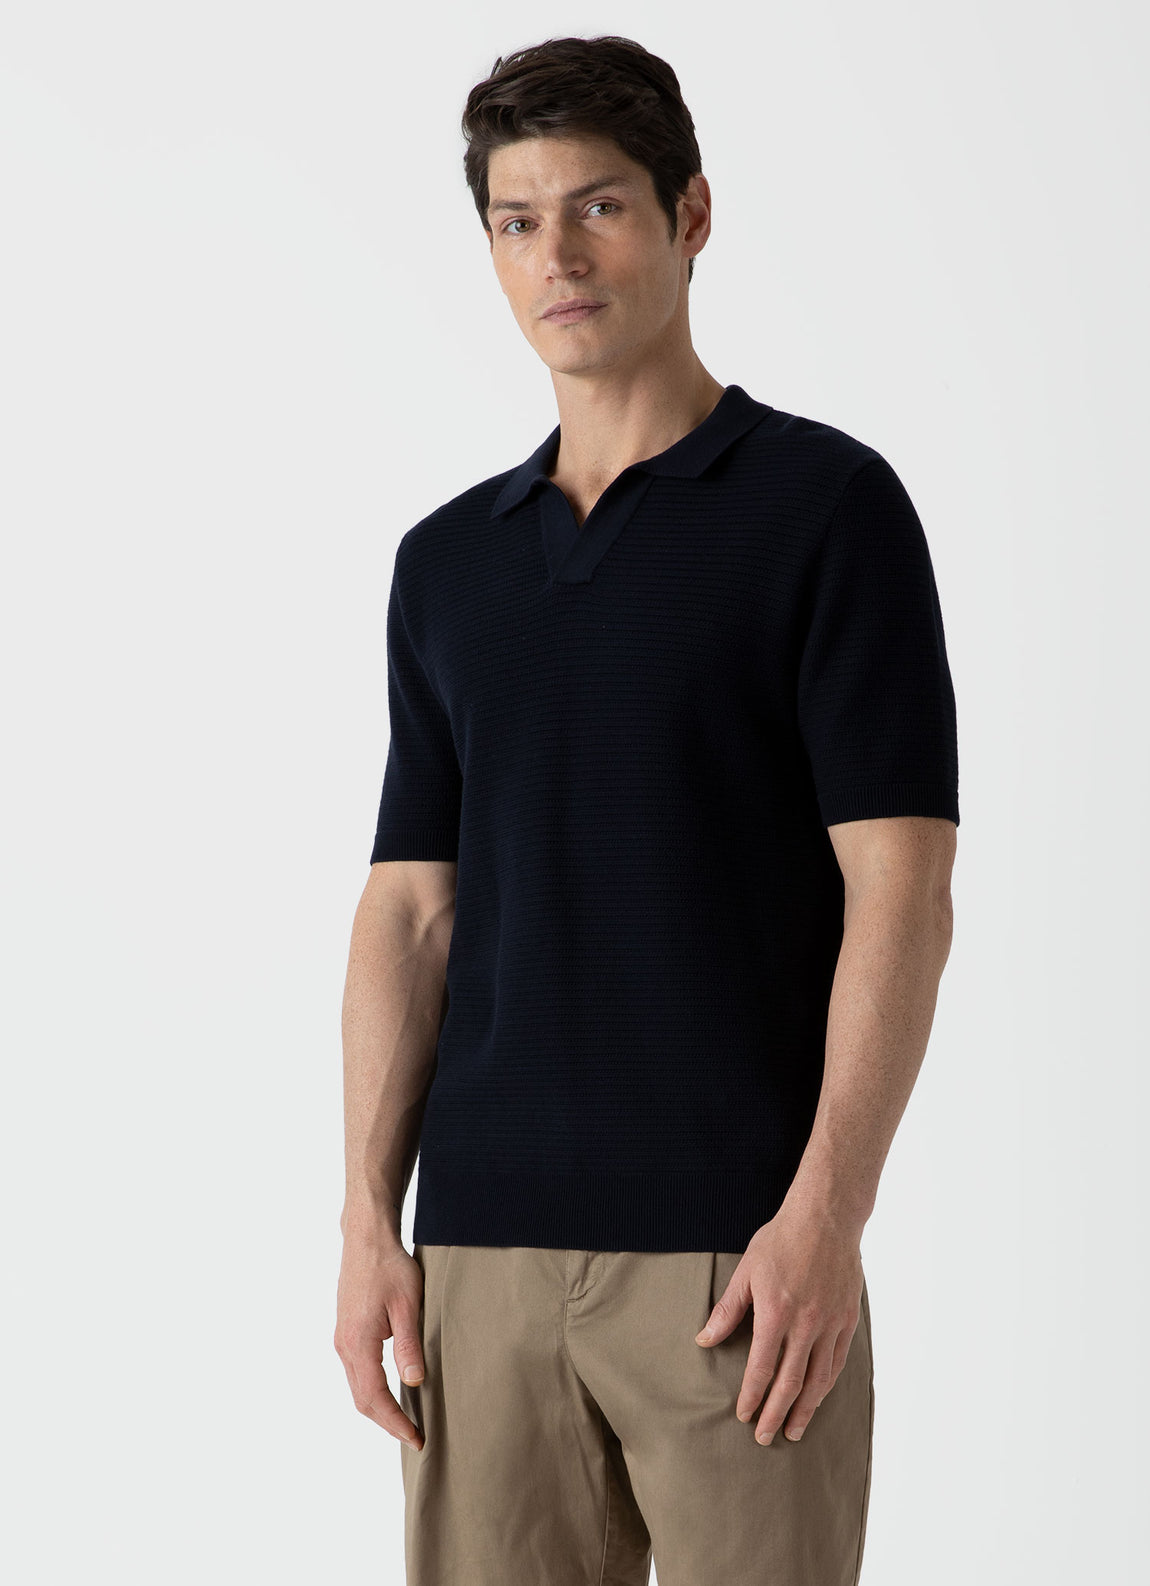 Men's Open Textured Polo Shirt in Navy | Sunspel